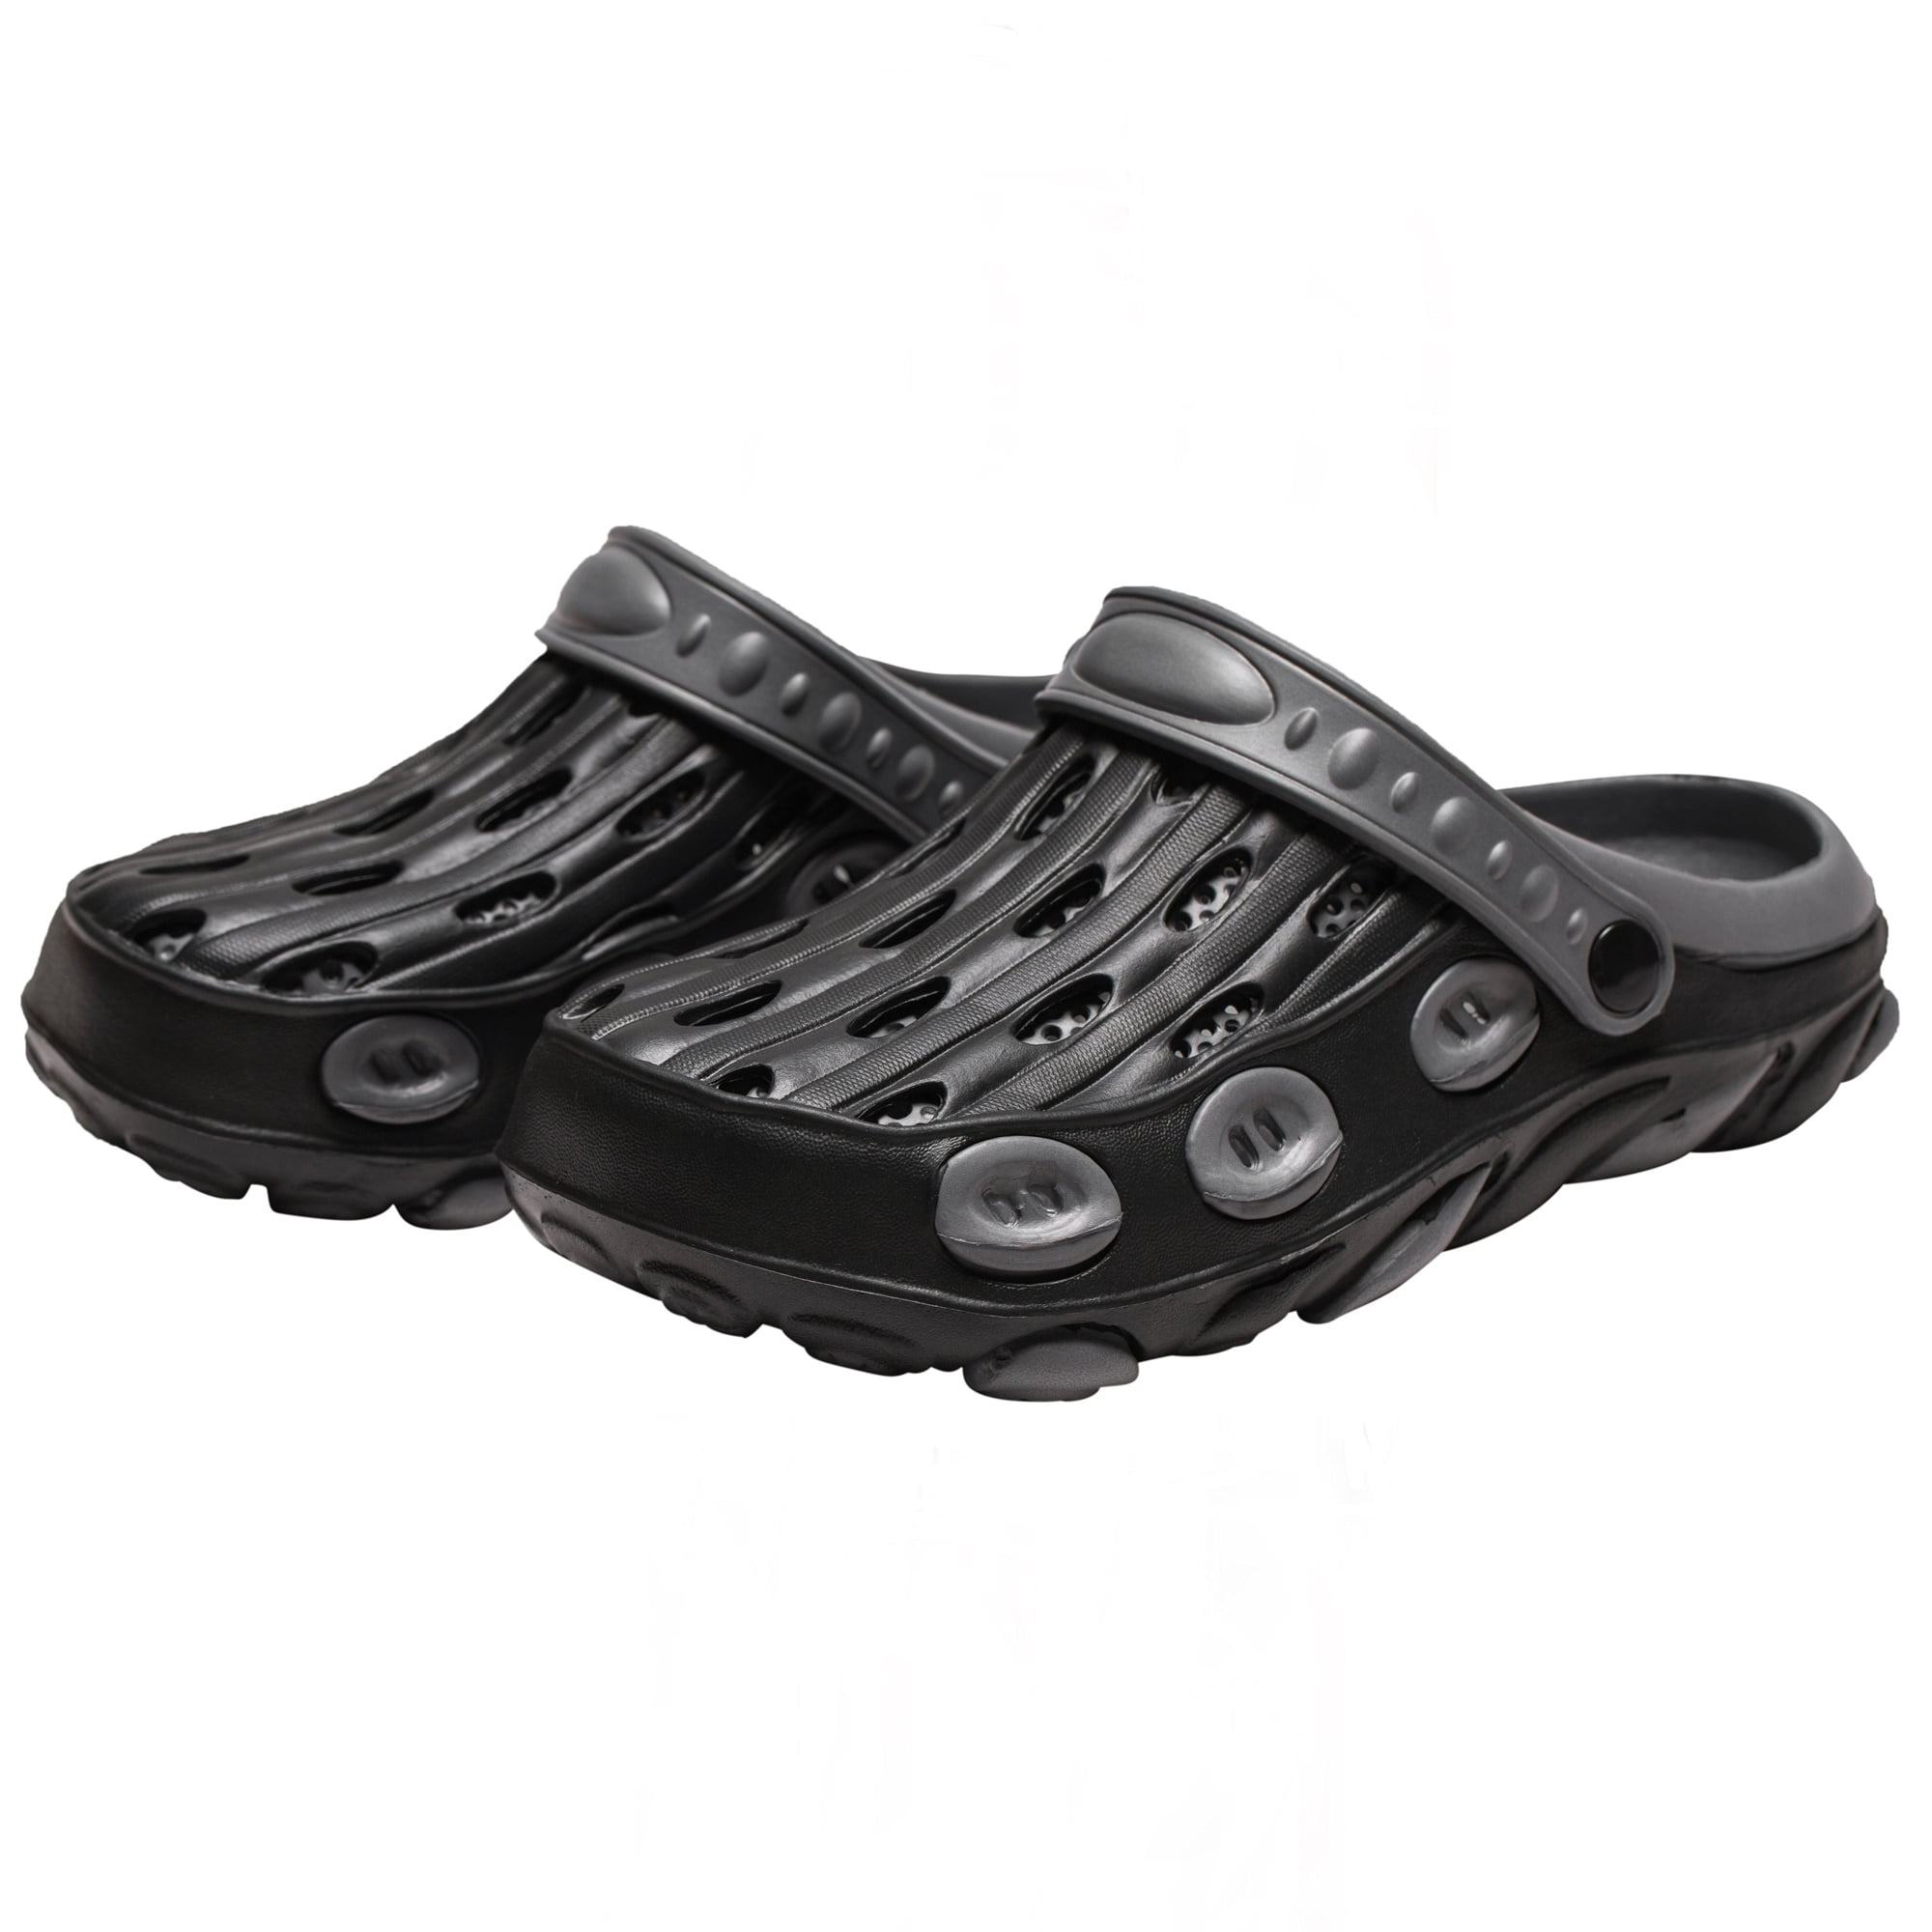 Alpine Swiss Mens Clogs Comfortable Slip on Gardening Shoes Summer Sandals Mules - Black - Size 10